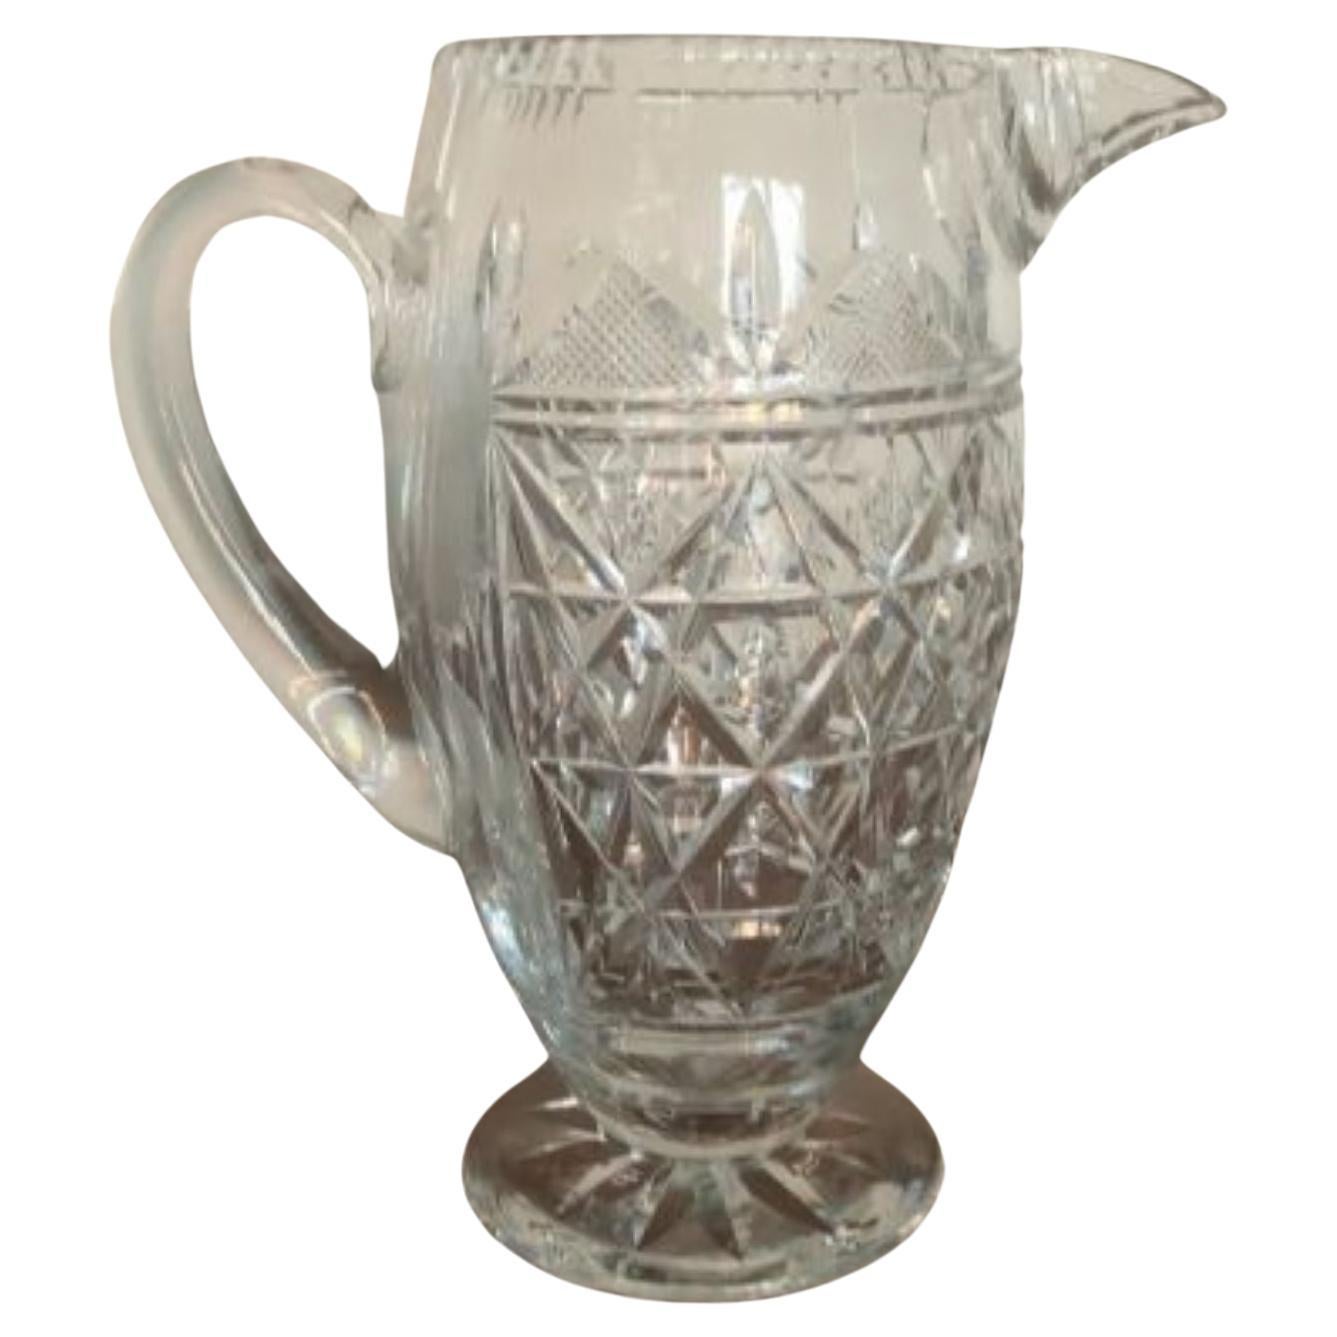 Superb quality antique cut glass water jug For Sale